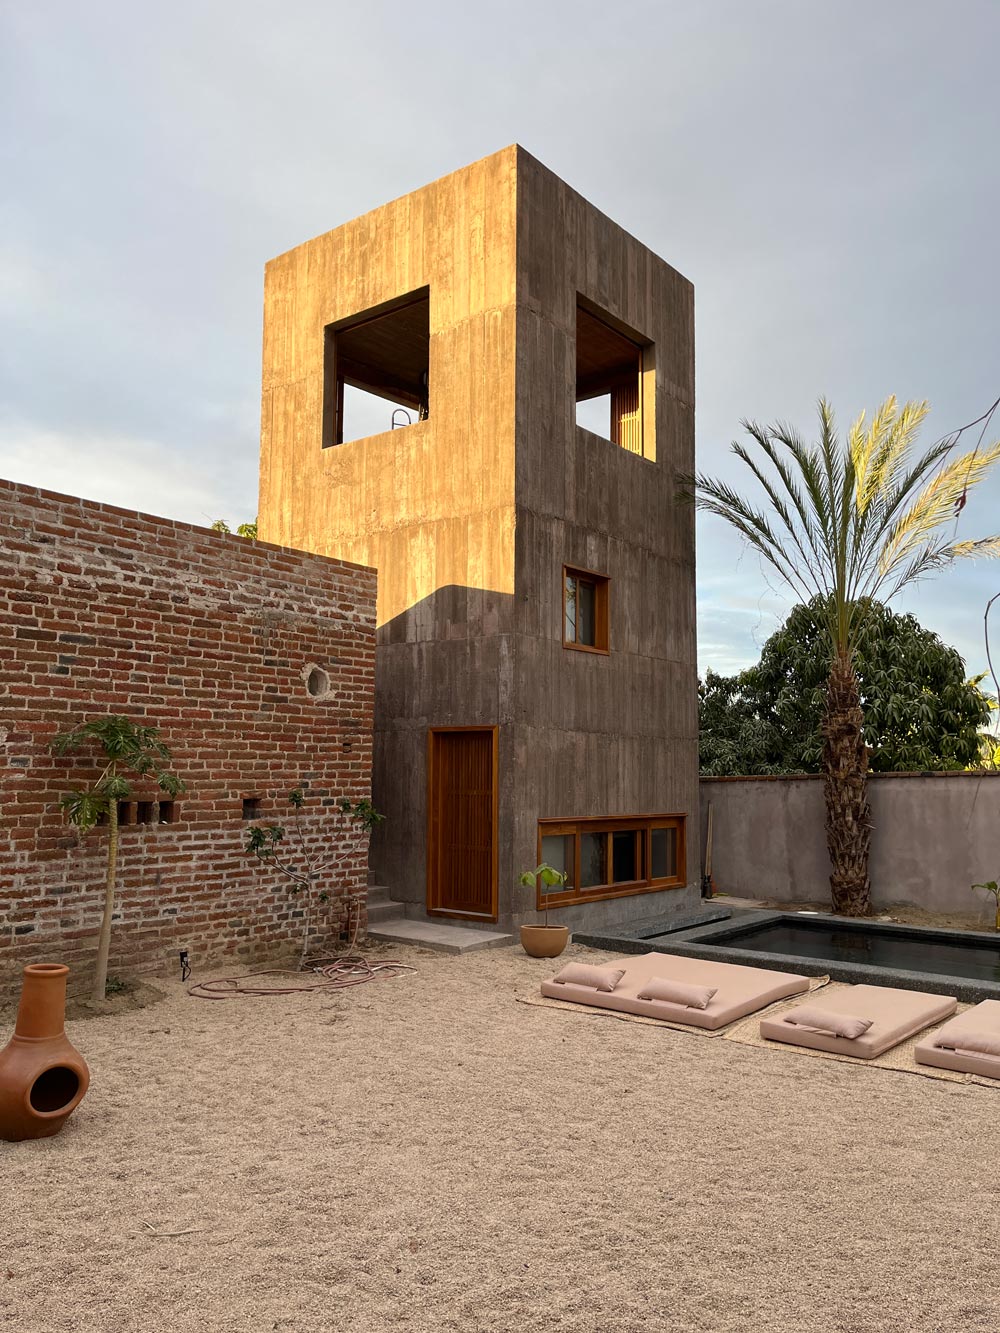 Casa Melina designed in collaboration with chef Ernesto Kut